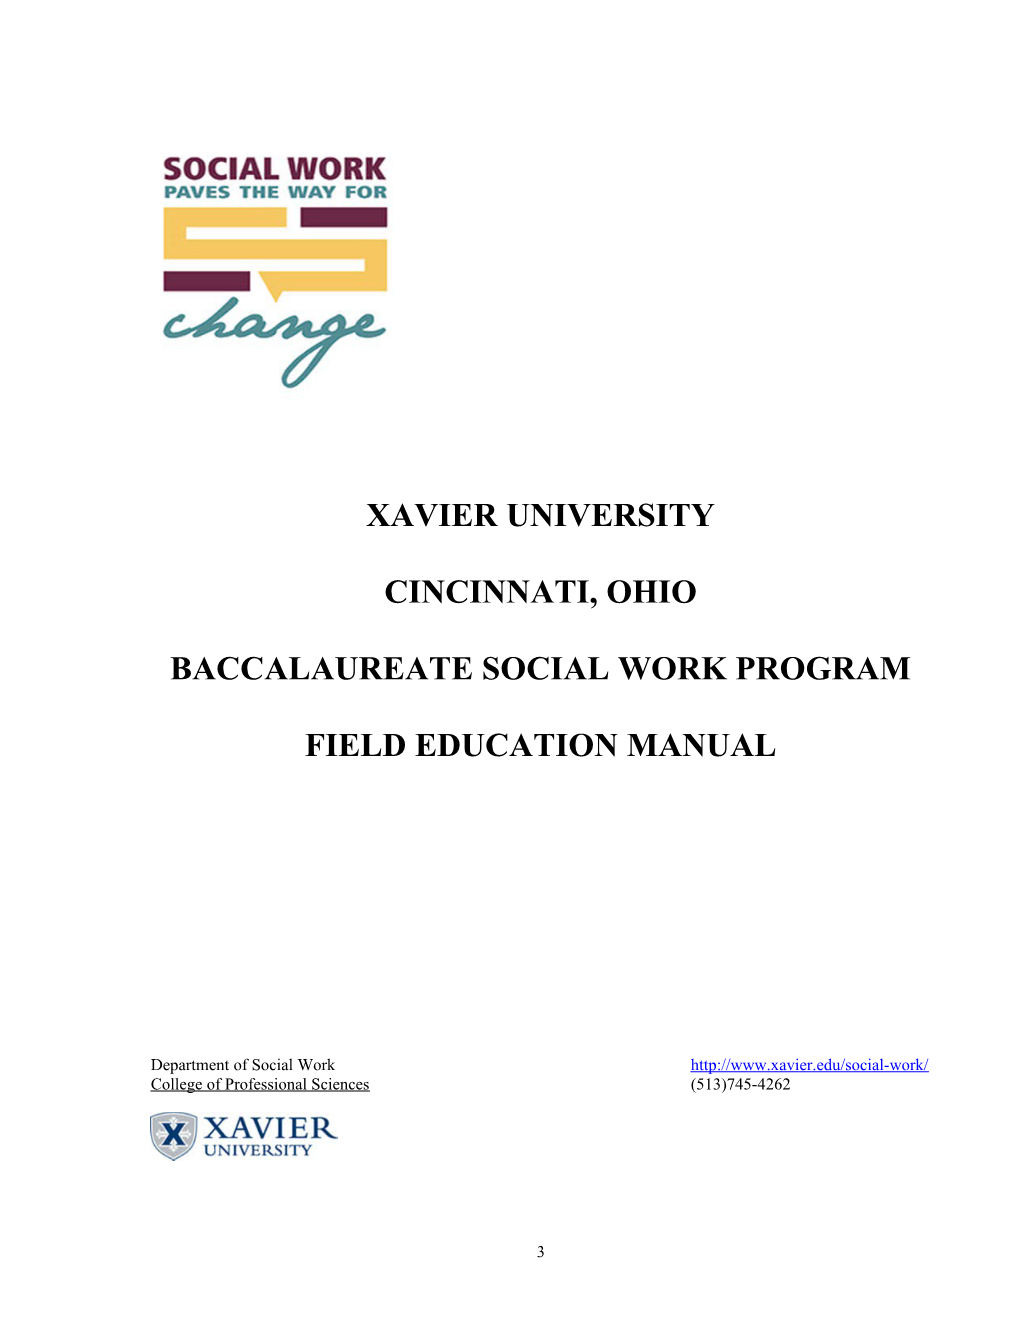 Baccalaureate Social Work Program